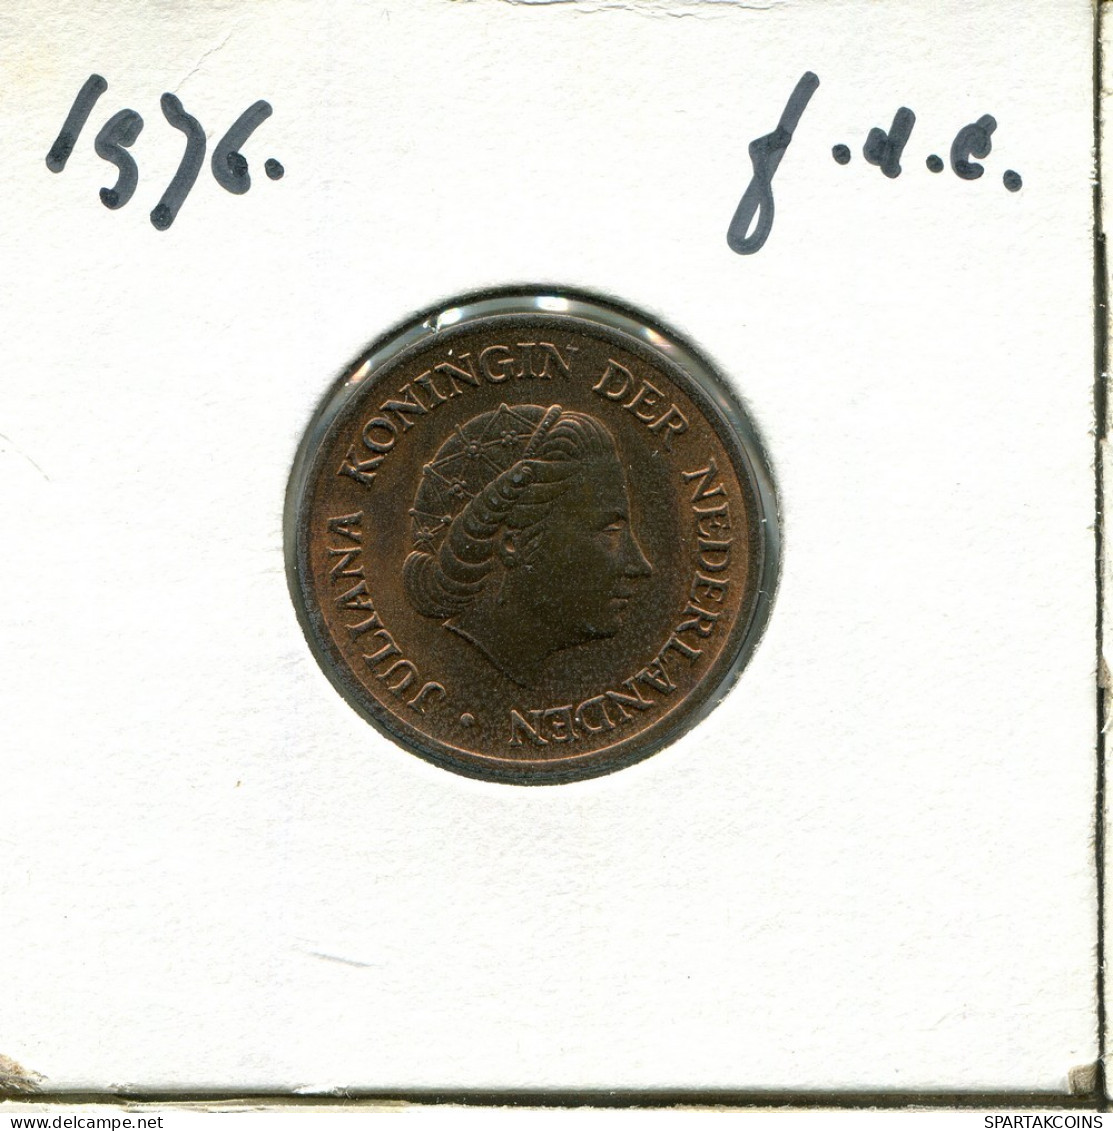 5 CENTS 1976 NEERLANDÉS NETHERLANDS Moneda #AU434.E.A - 1948-1980 : Juliana